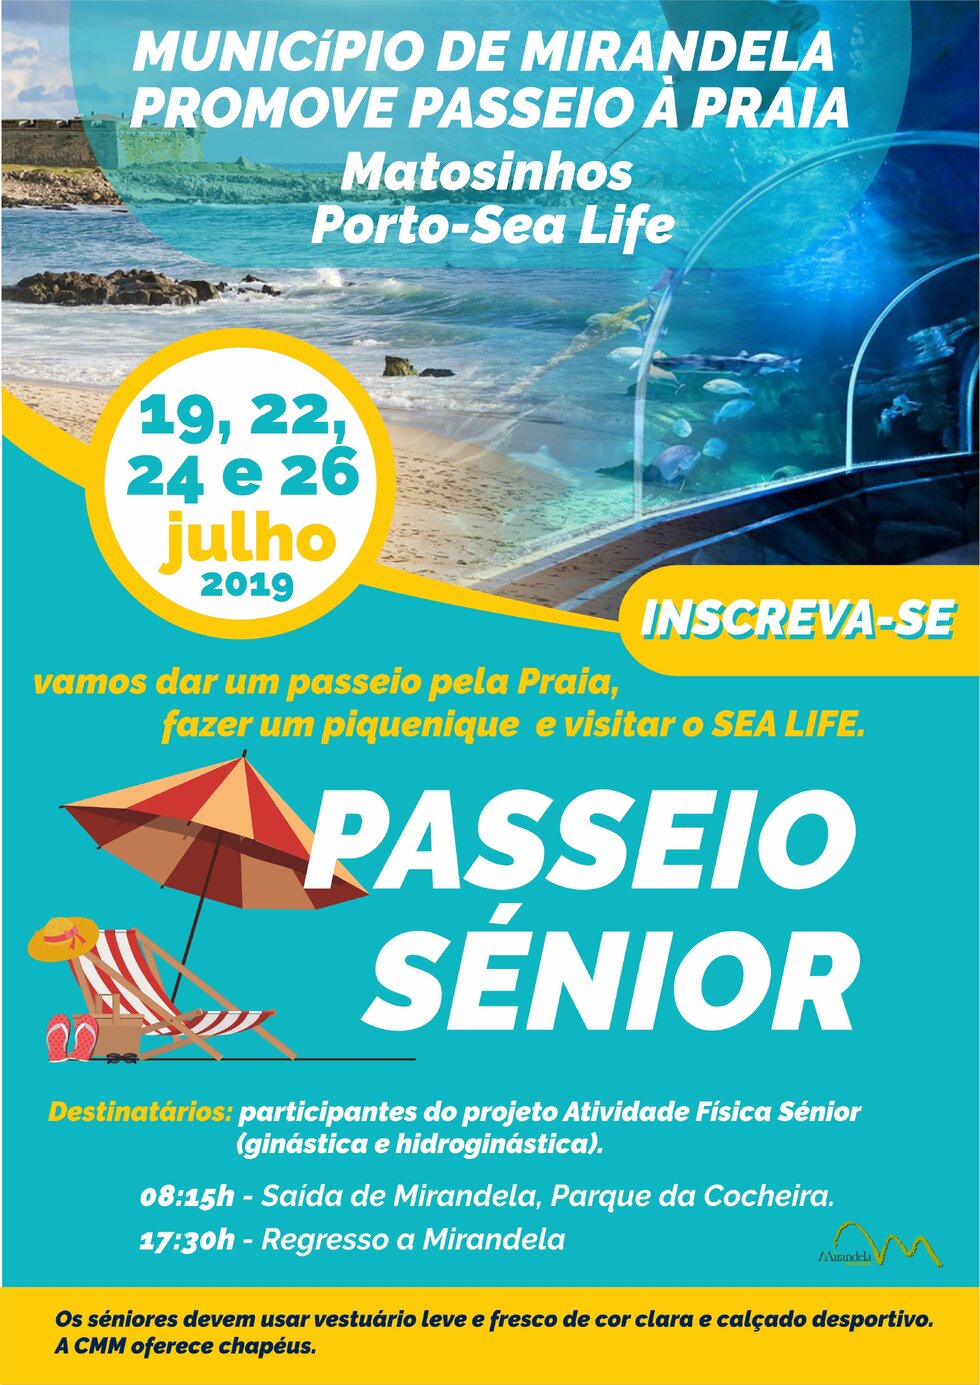 Cartaz_Passeio_S_nior_Matosinhos_Porto_Sealife_2019